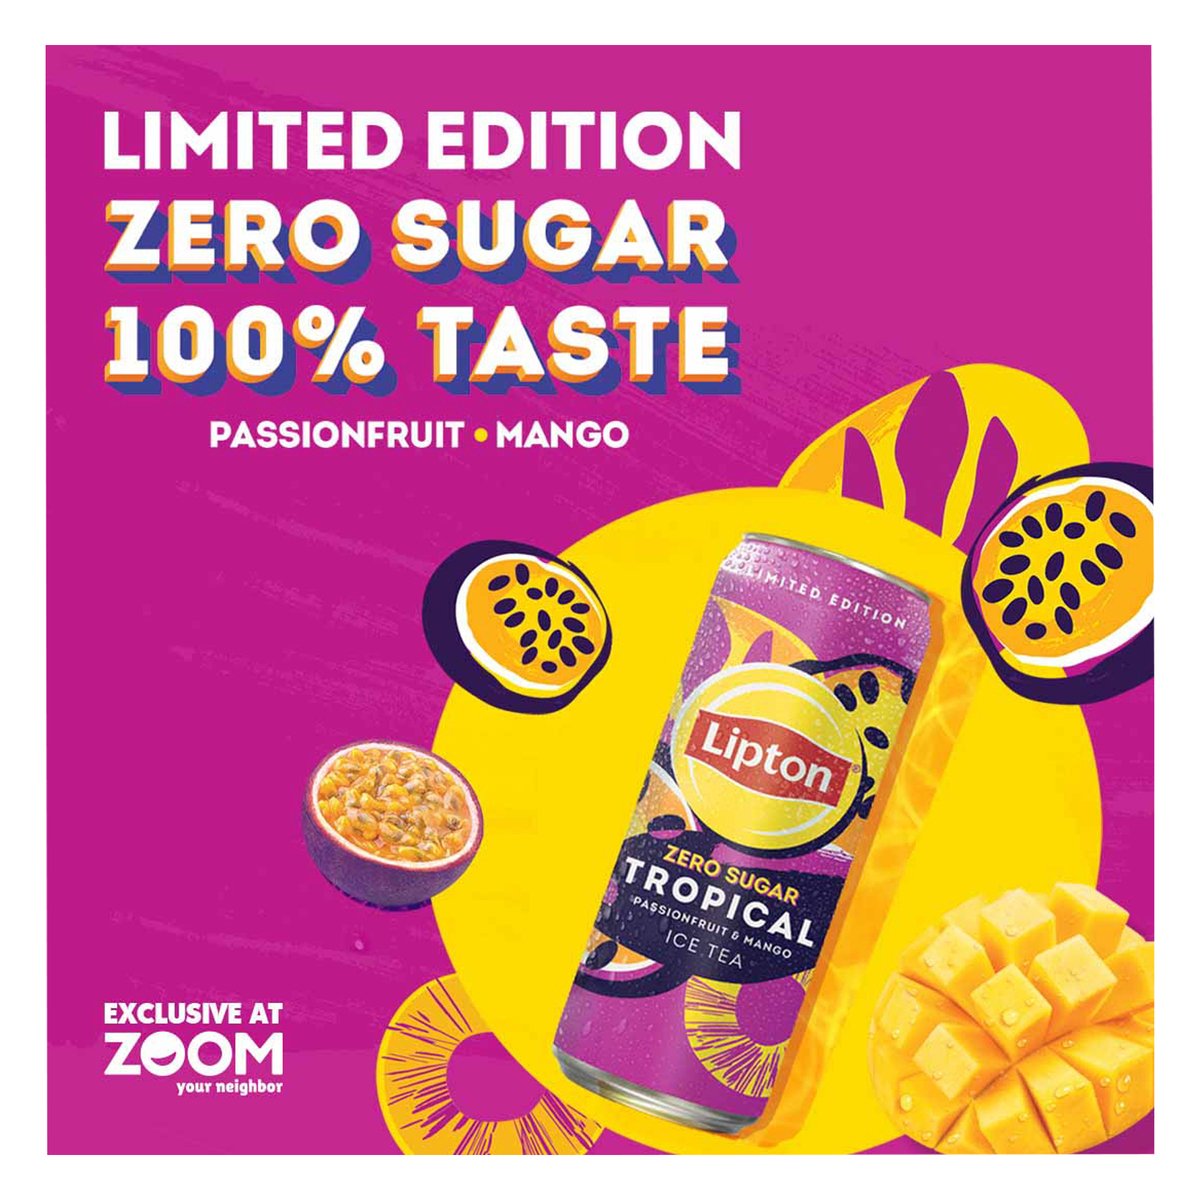 Lipton Zero Sugar Tropical Passionfruit & Mango Ice Tea 6 x 320 ml